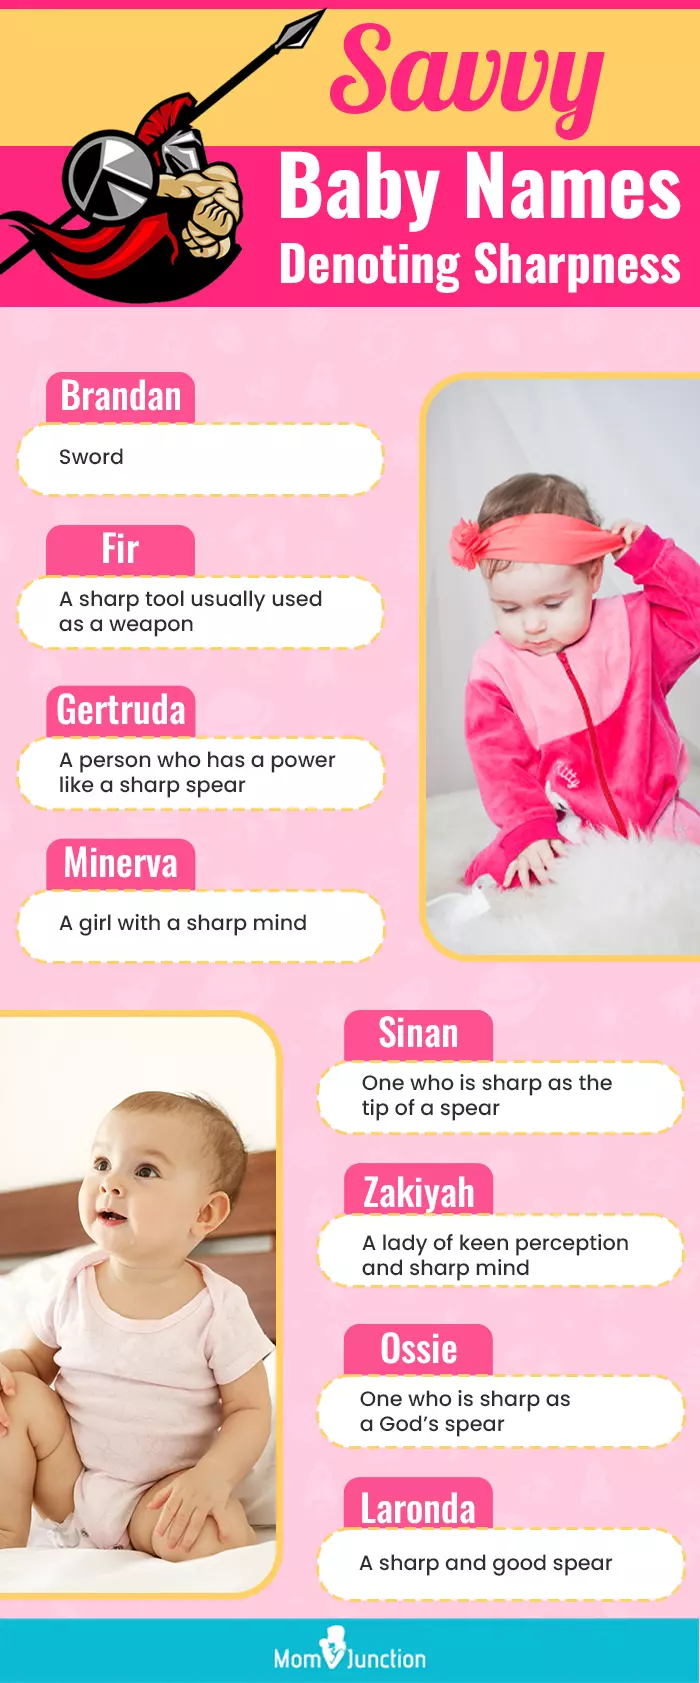 savvy baby names denoting sharpness (infographic)